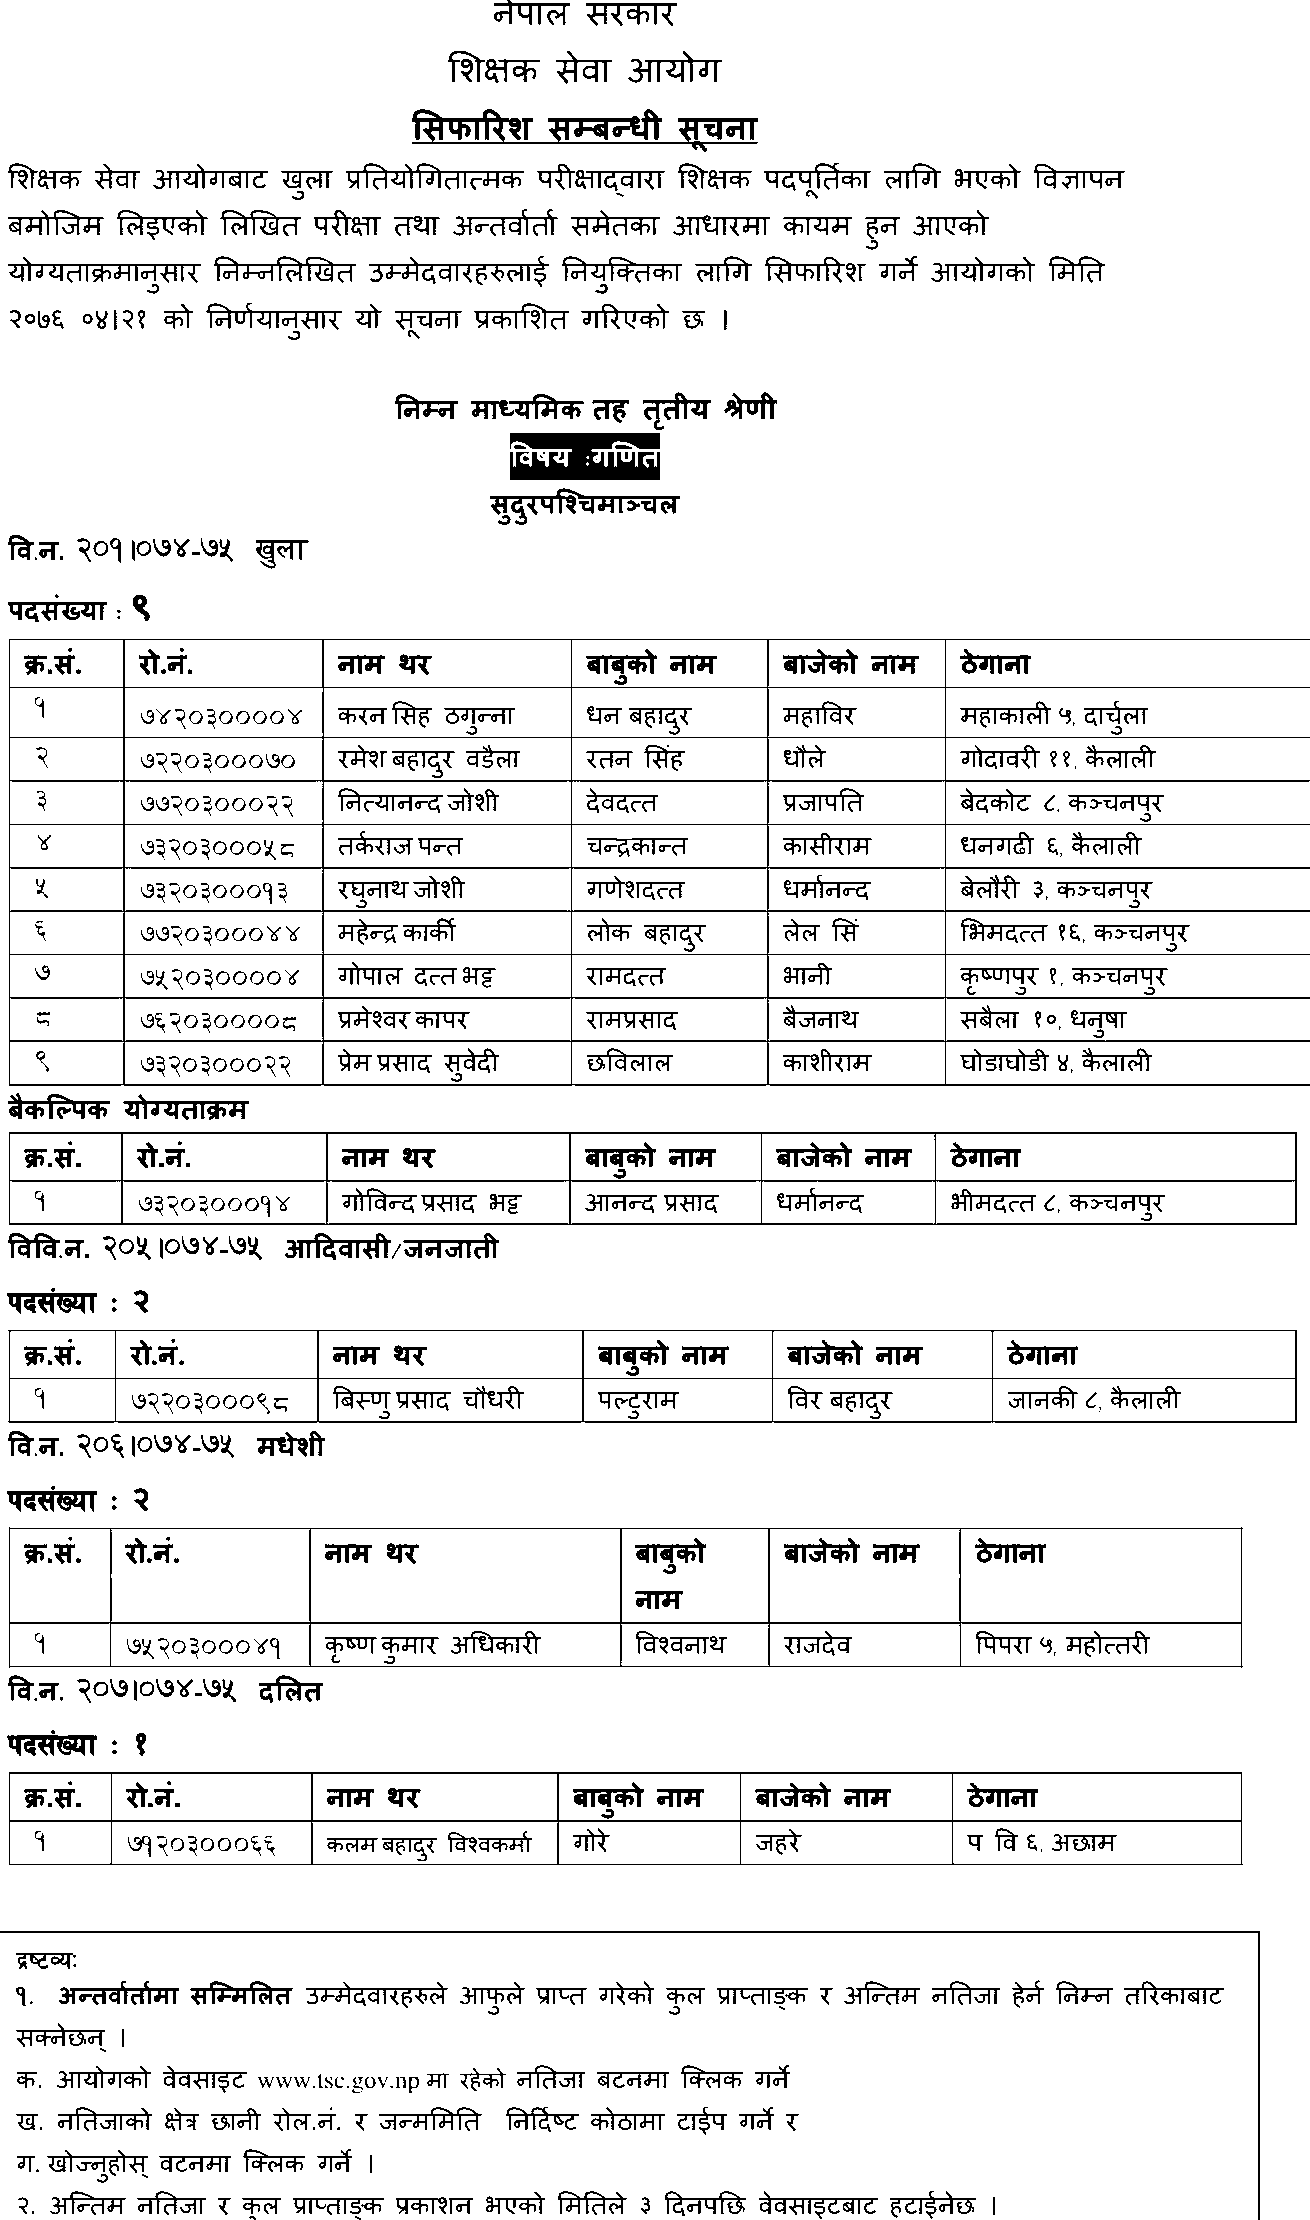 Basic Level Mathematics and Science Result of Sudurpaschimanchal - TSC